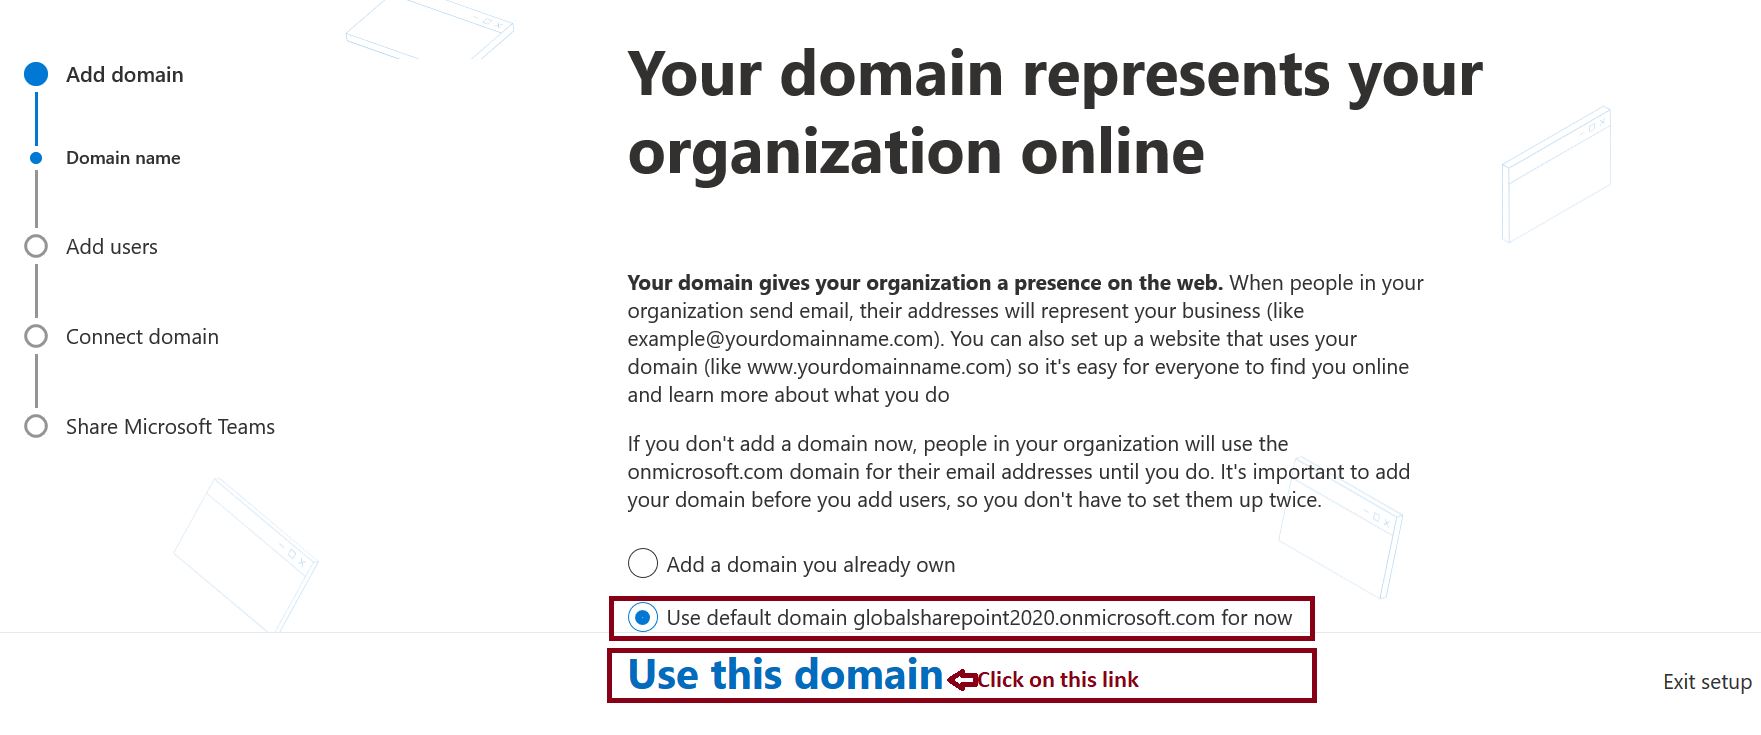 Microsoft teams exploratory setup - Use this domain in Add Domain - Microsoft 365 admin center